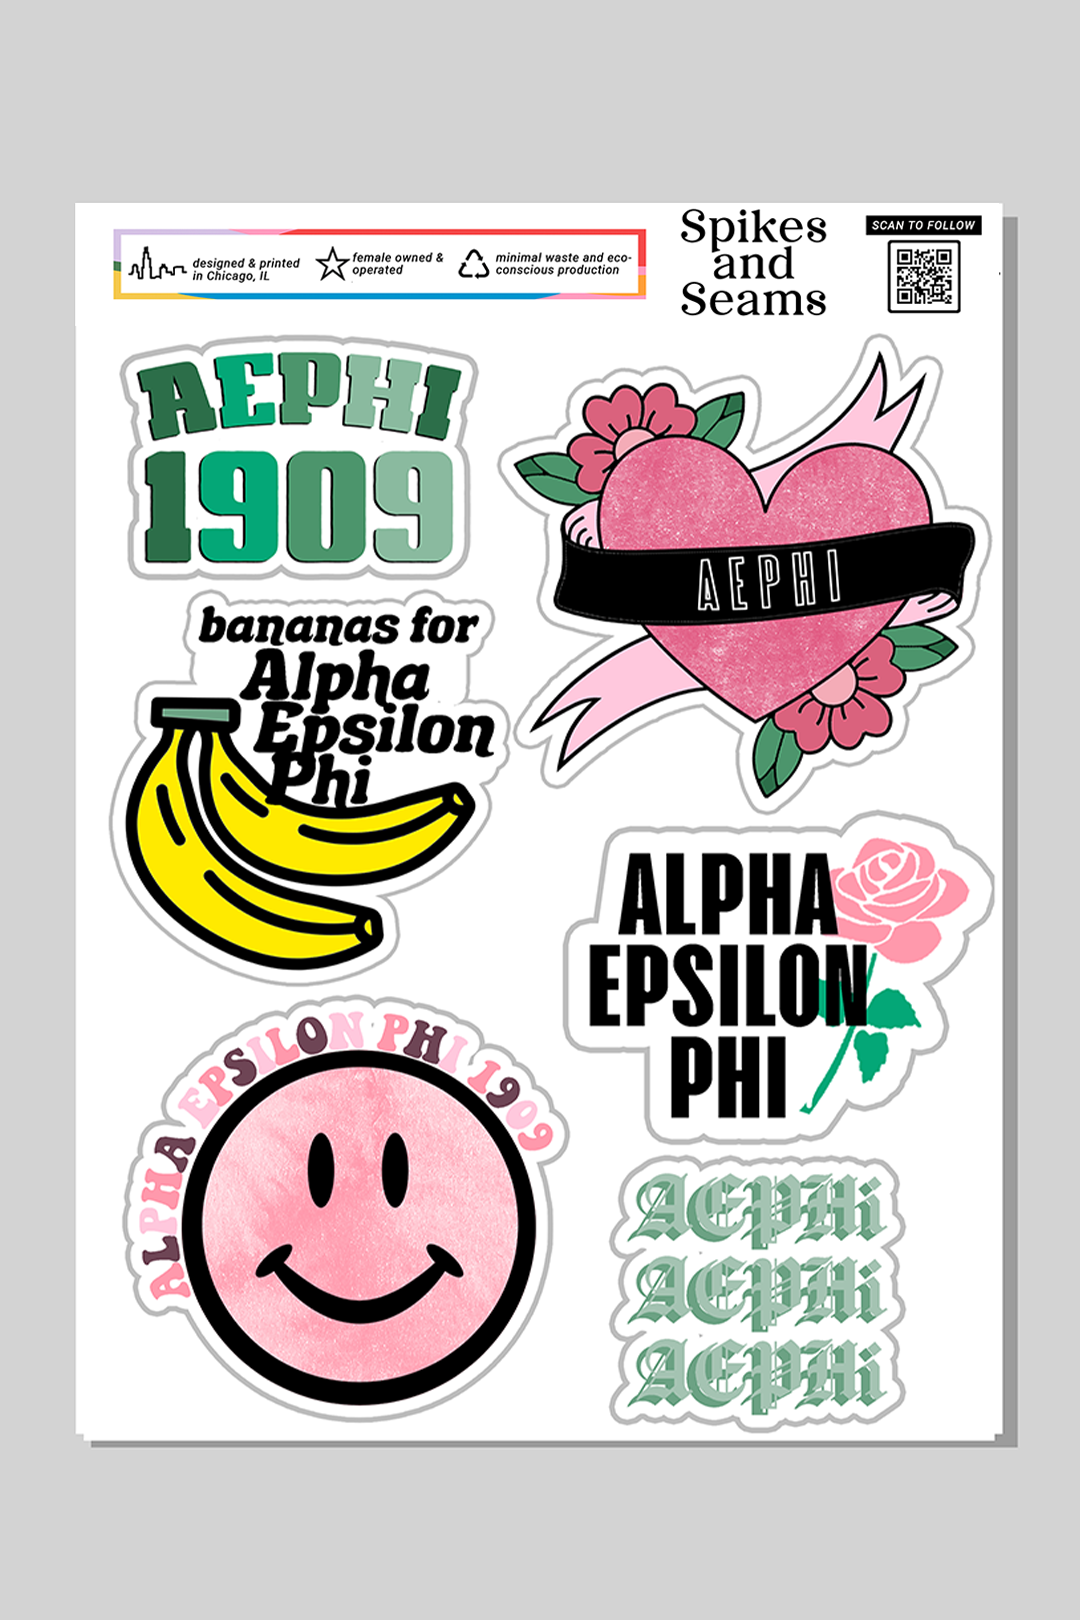 Adpi Sorority Stickers for Sale